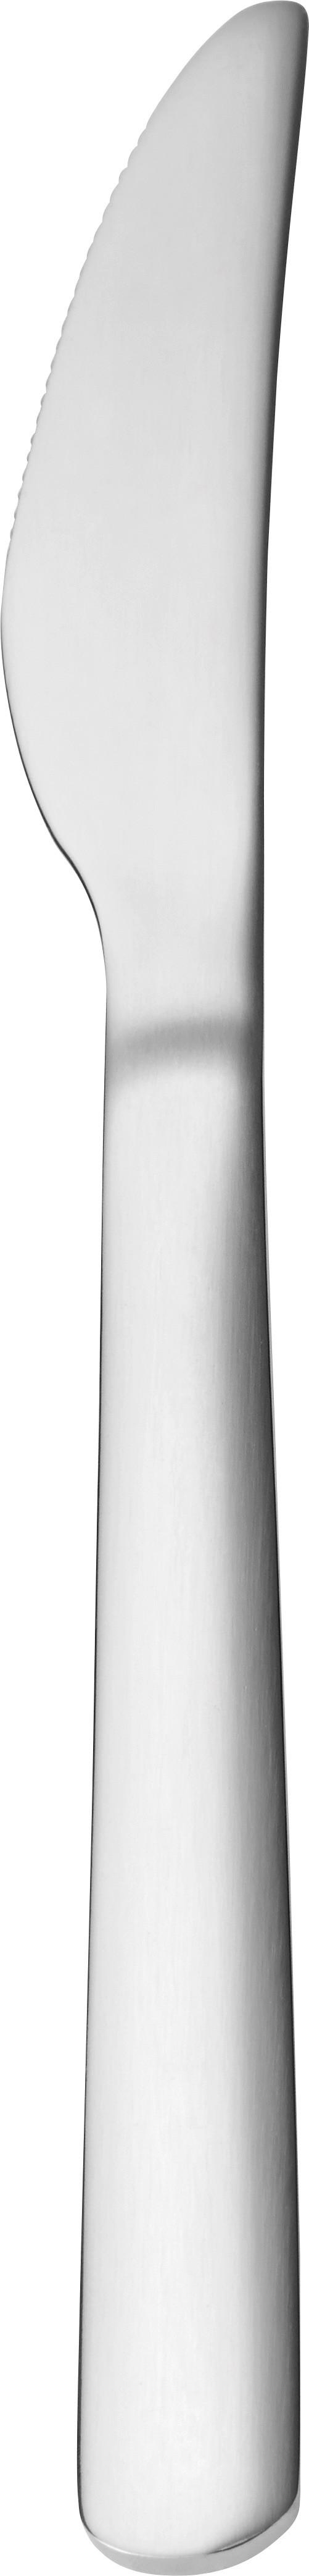 Messer Demi aus Edelstahl - Edelstahlfarben, KONVENTIONELL, Metall (21cm) - Modern Living